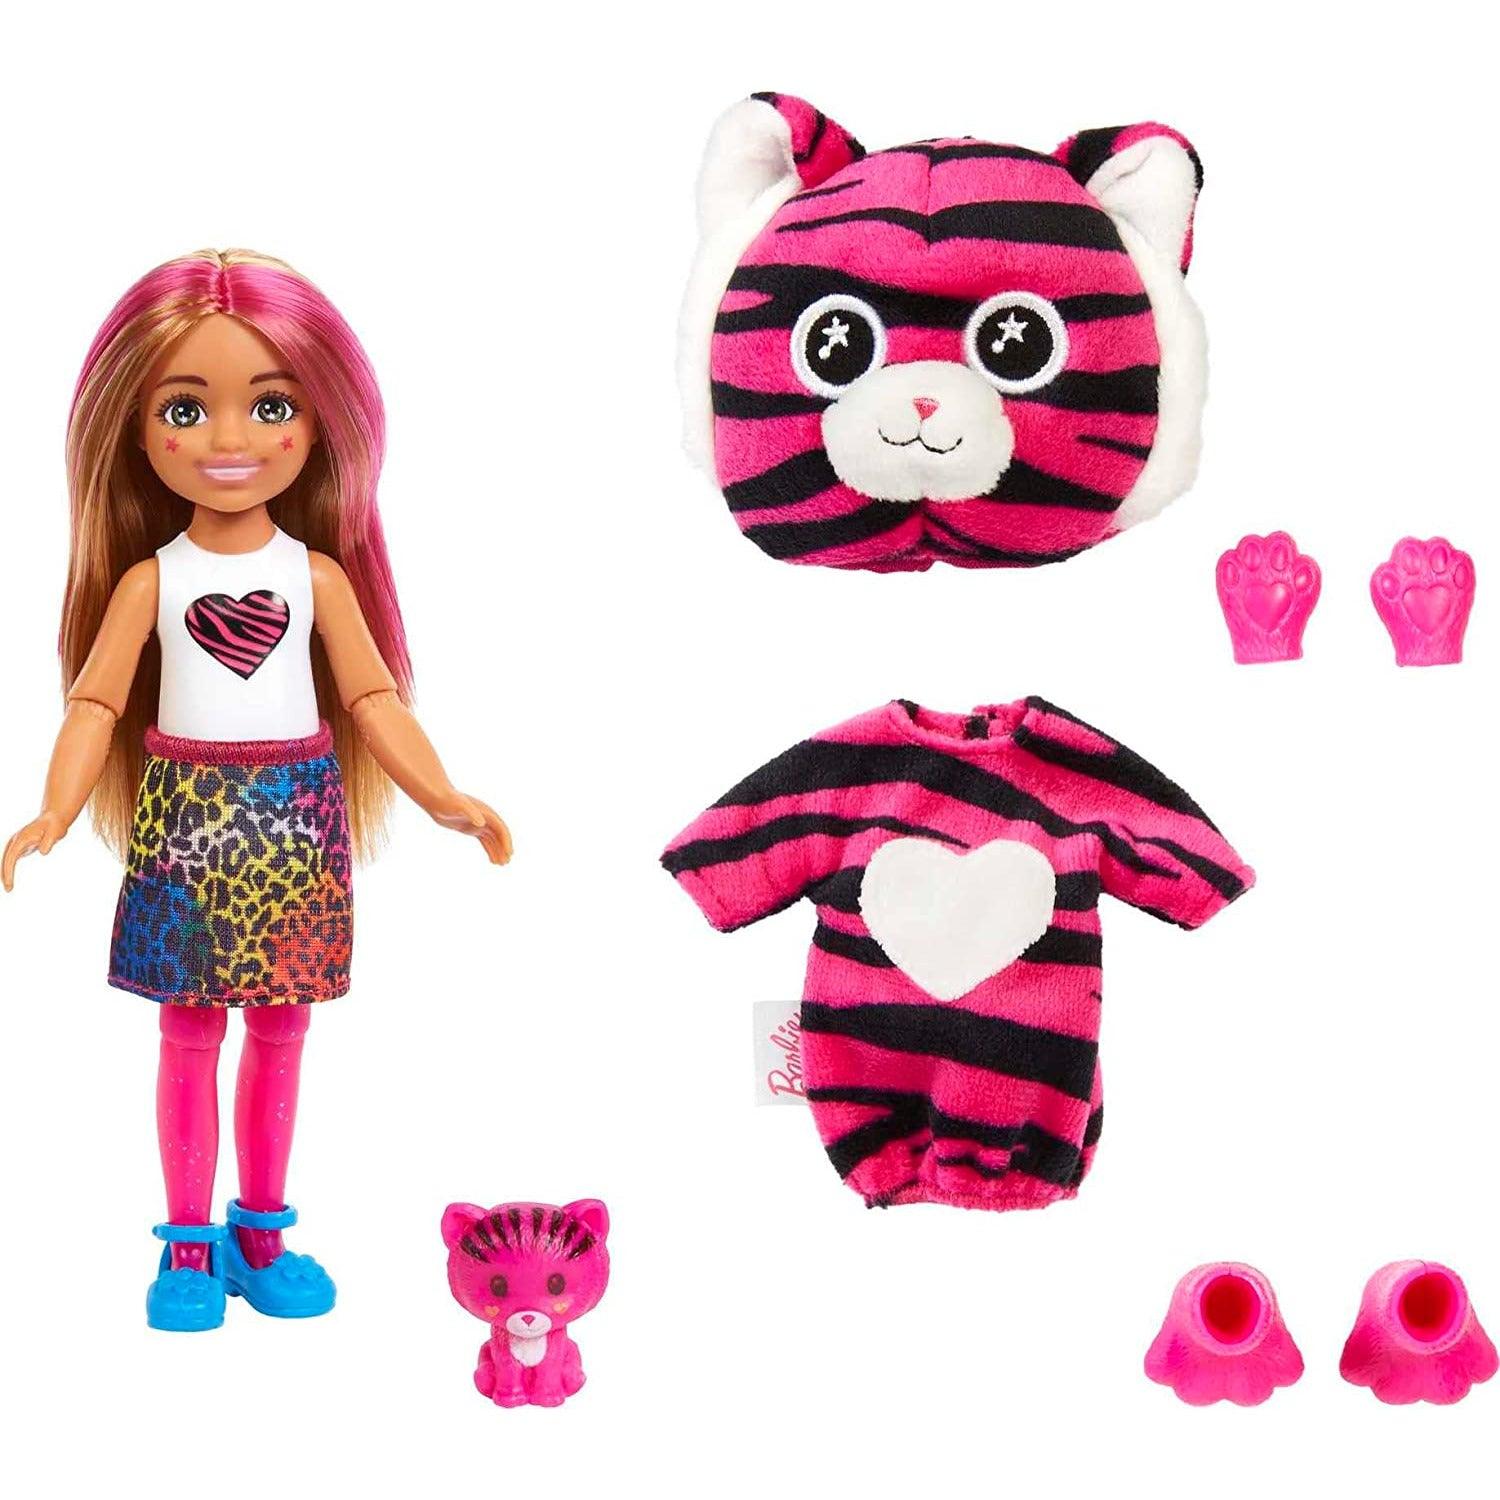 Barbie Cutie Reveal Chelsea Small Doll, Jungle Series Tiger Plush Costume, 7 Surprises Including Mini Pet & Color Change